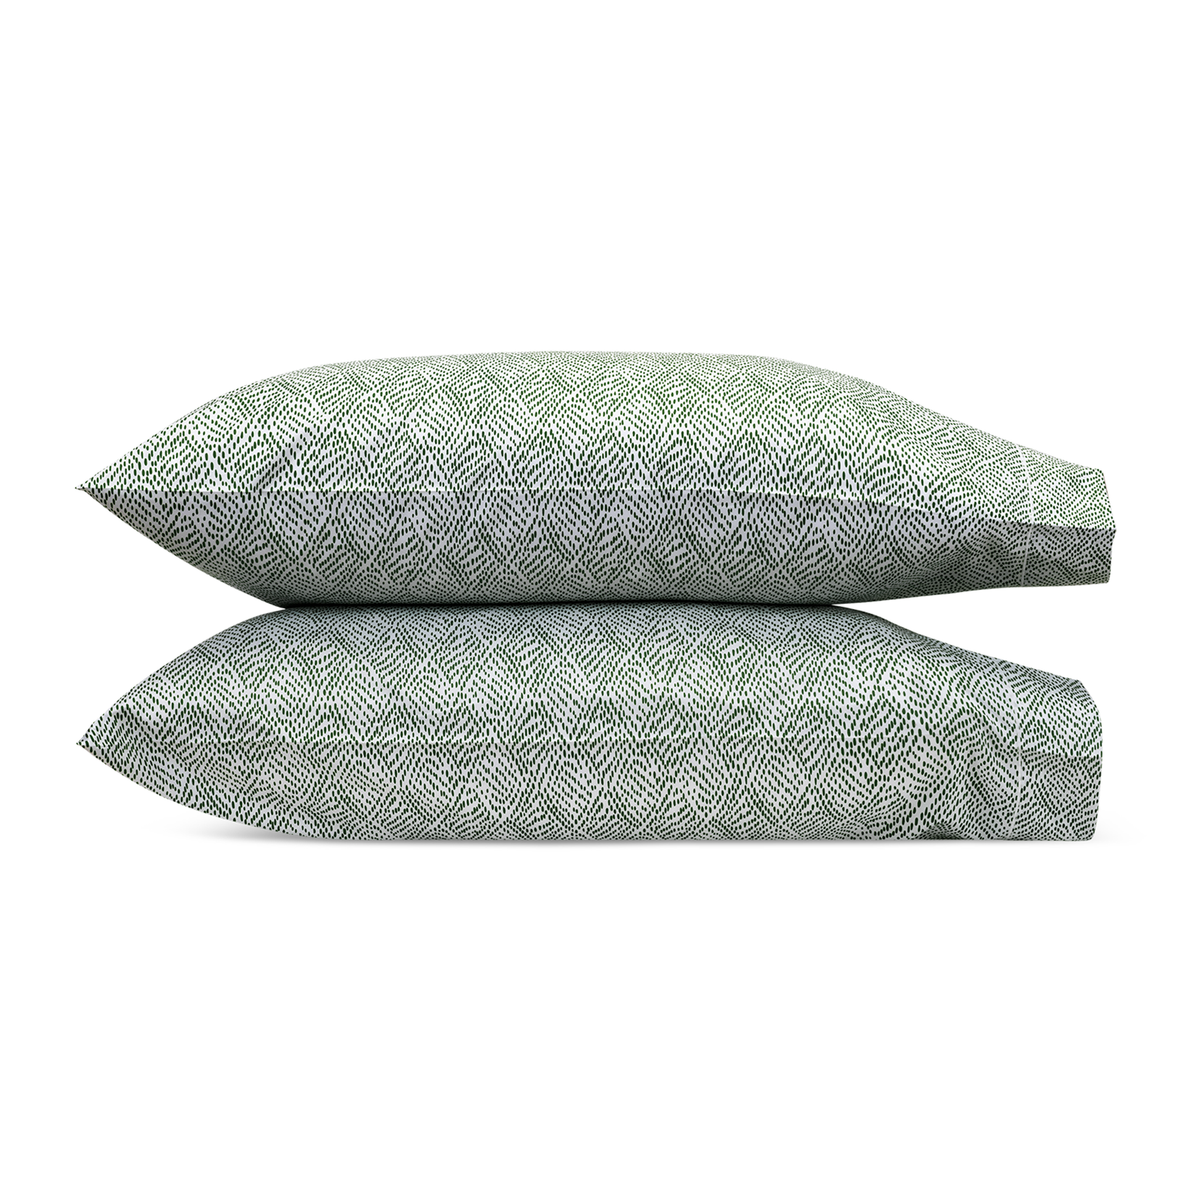 Pair of Pillowcase of Matouk Duma Diamond Bedding in Grass Color